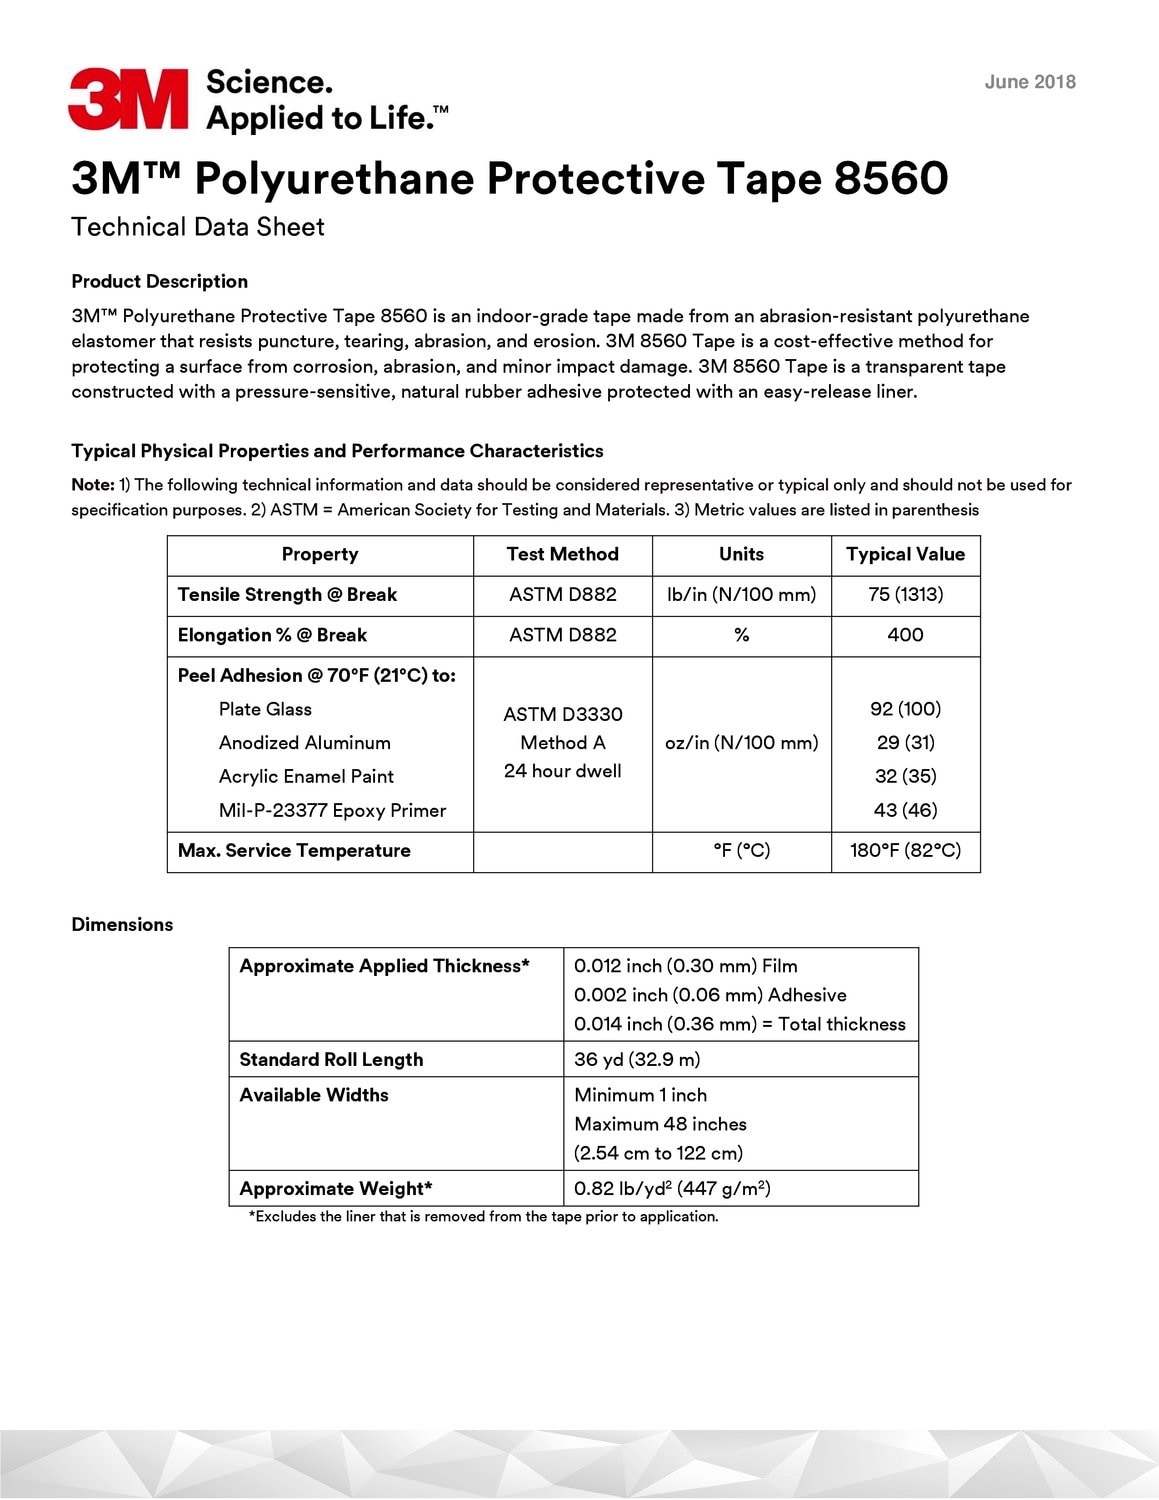 303 30375 UV Protectant 5 Gallon for Vinyl, Plastic, Rubber, Fiberglass, Leather